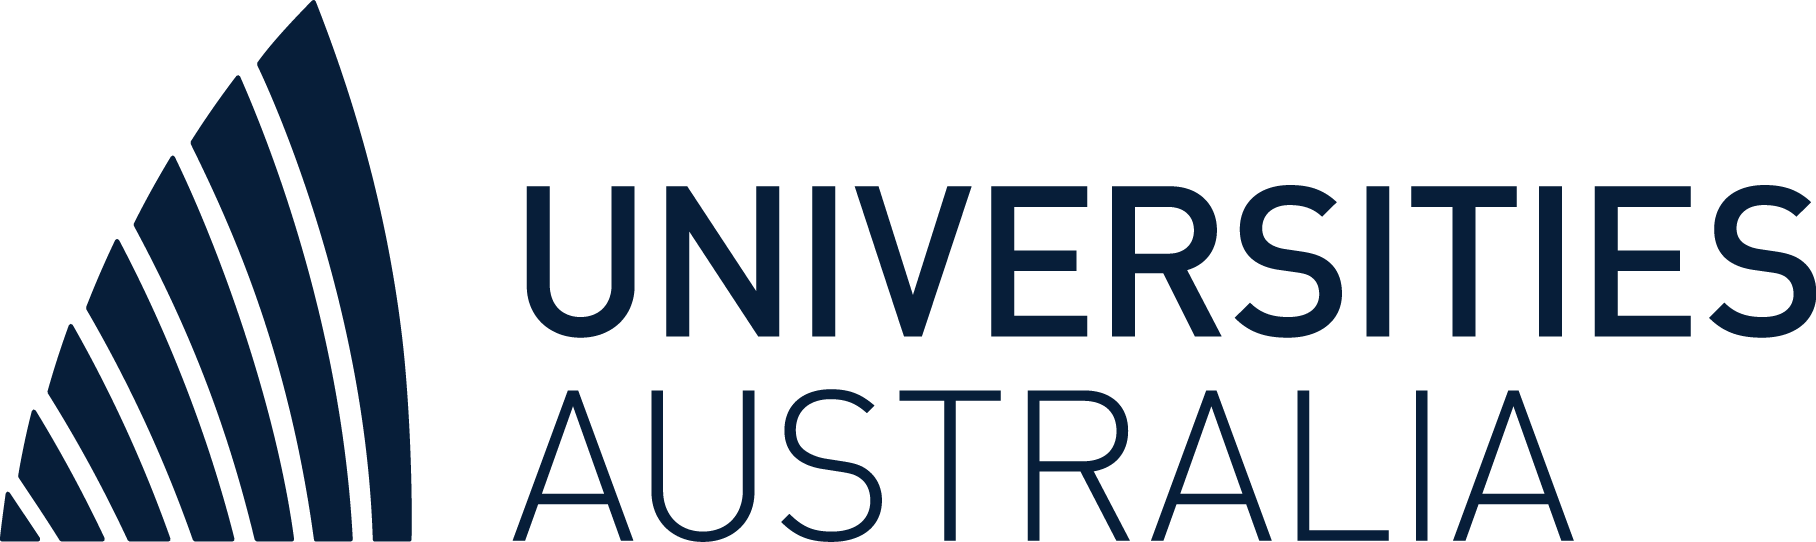 Universities Australia: Discover Learn Lead.